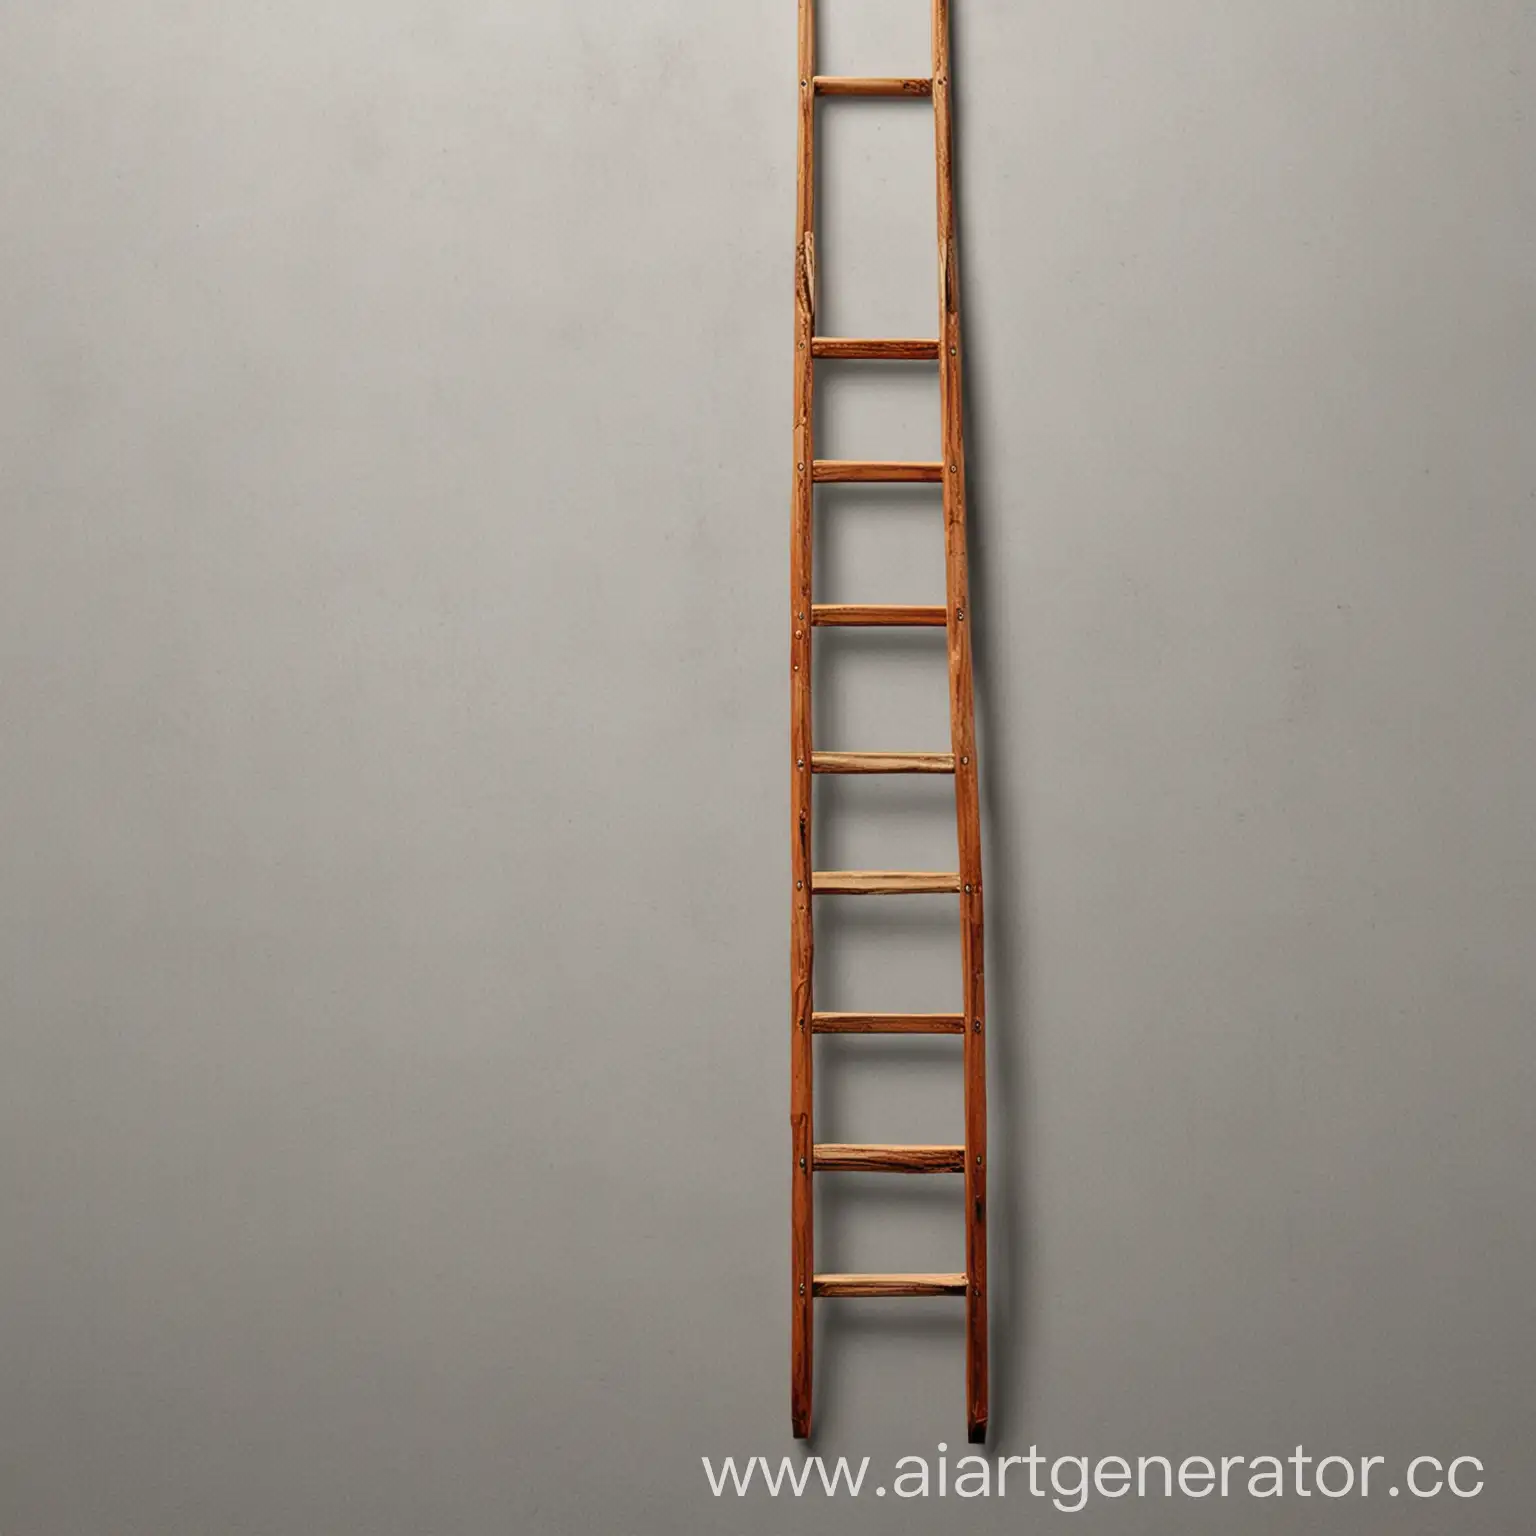 Ascending-Ladder-Scheme-in-Industrial-Setting